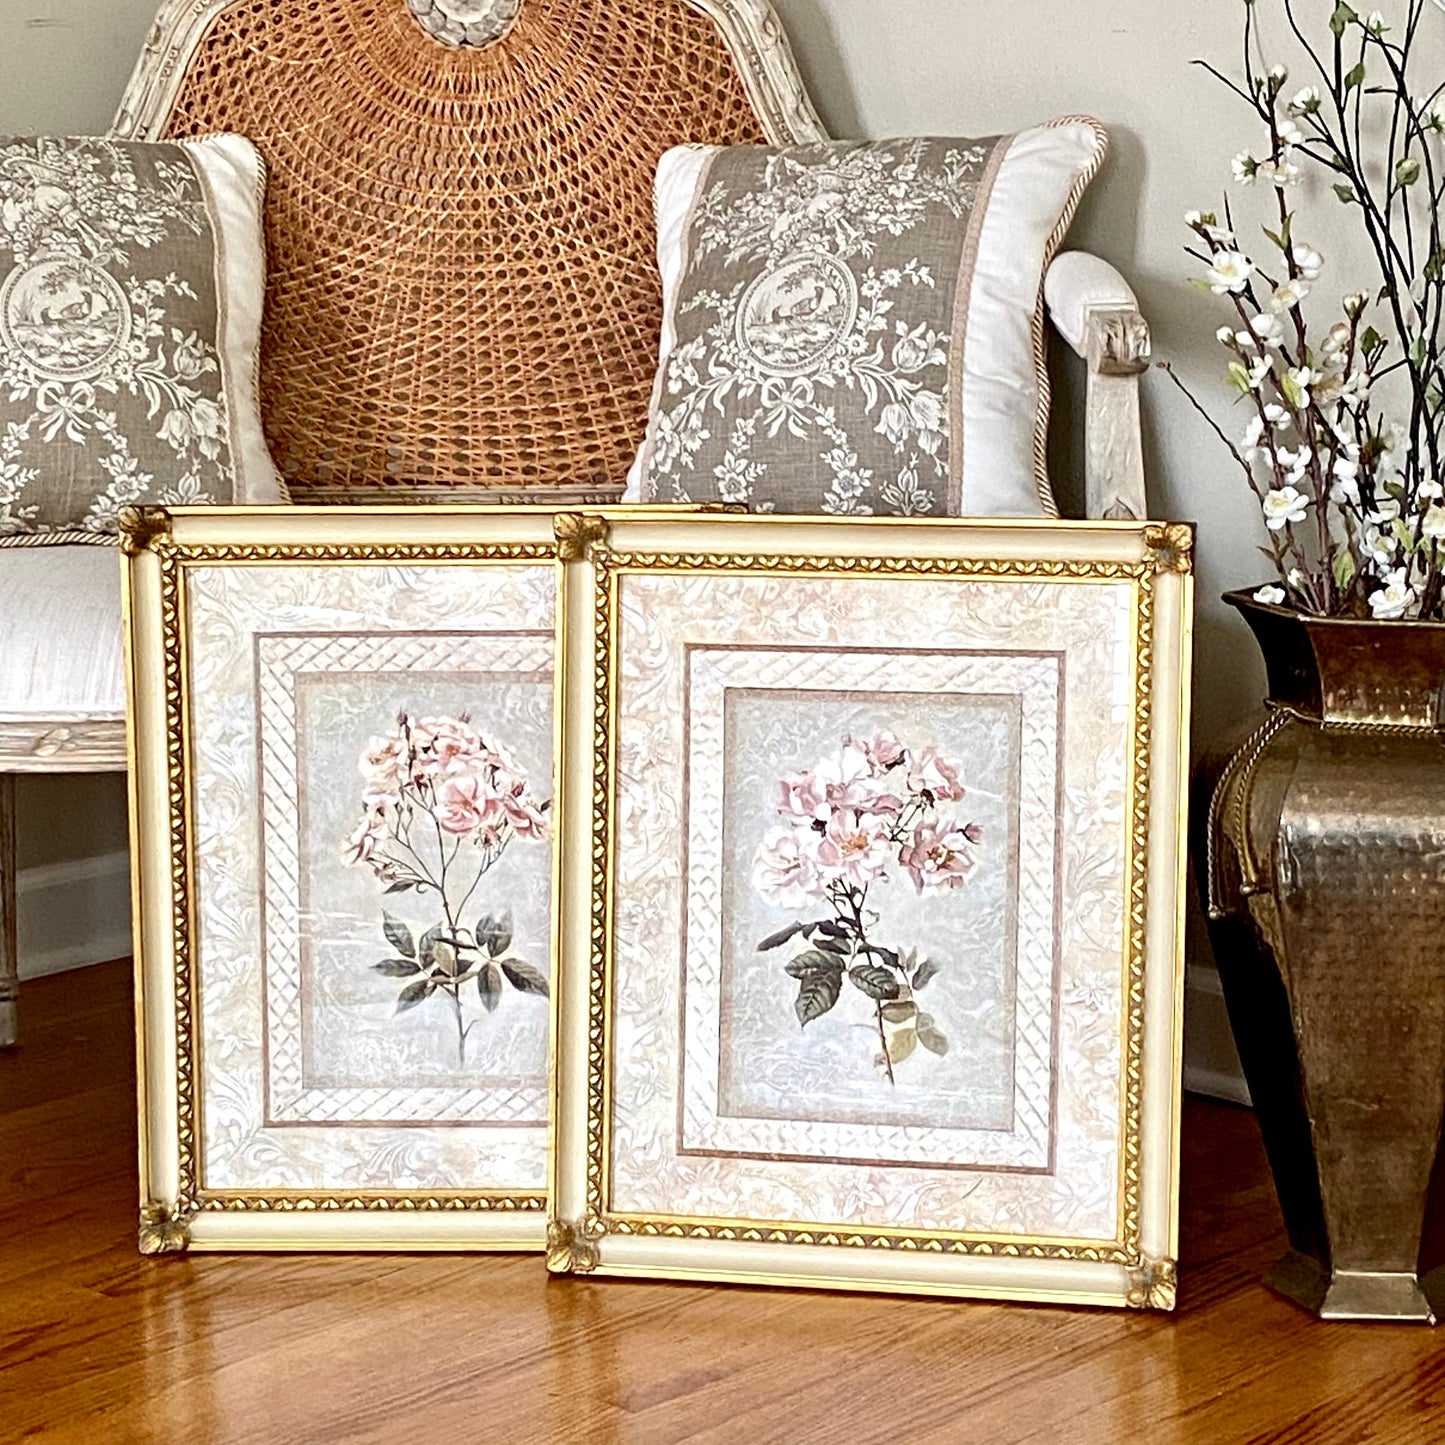 Lovely pair of vintage designer botanical floral wall art in gold gilt & ivory framing